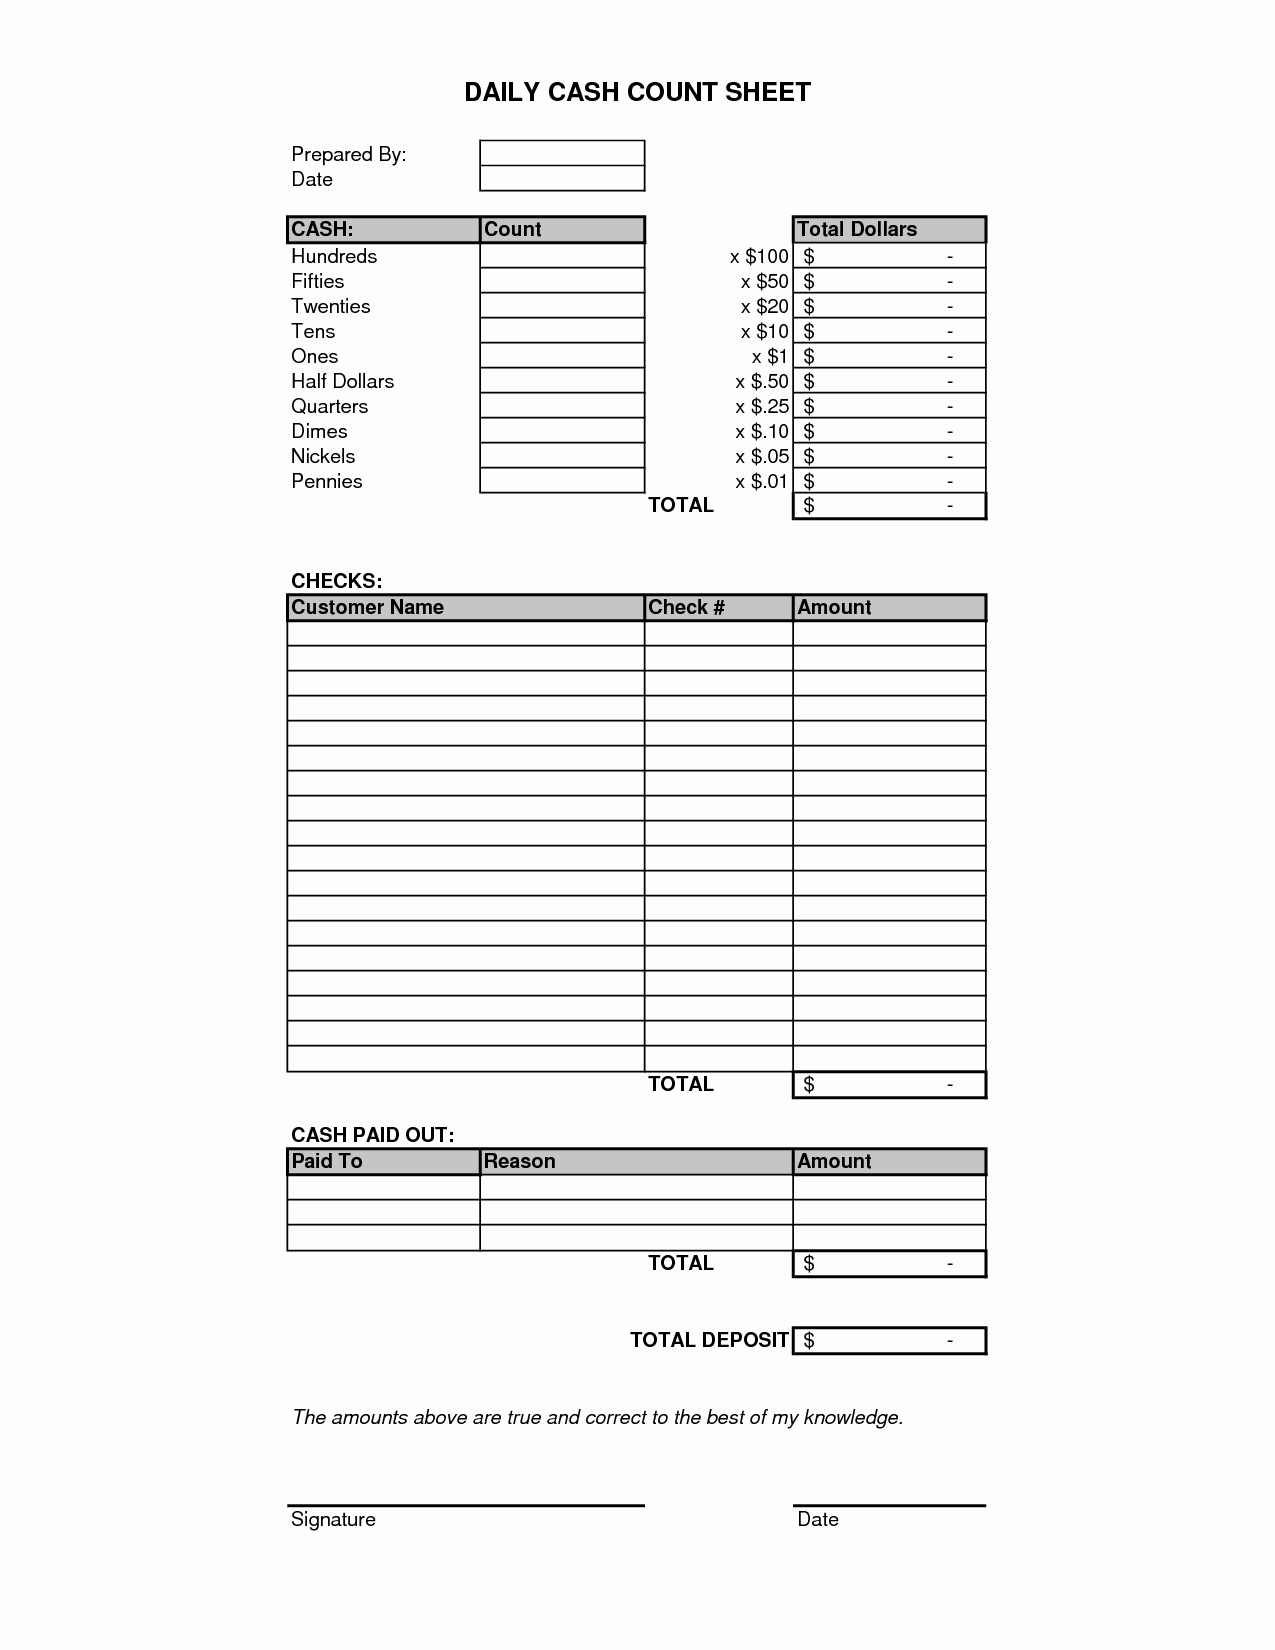 Cash Drawer Count Sheet Unique Daily Cash Count Sheet Template